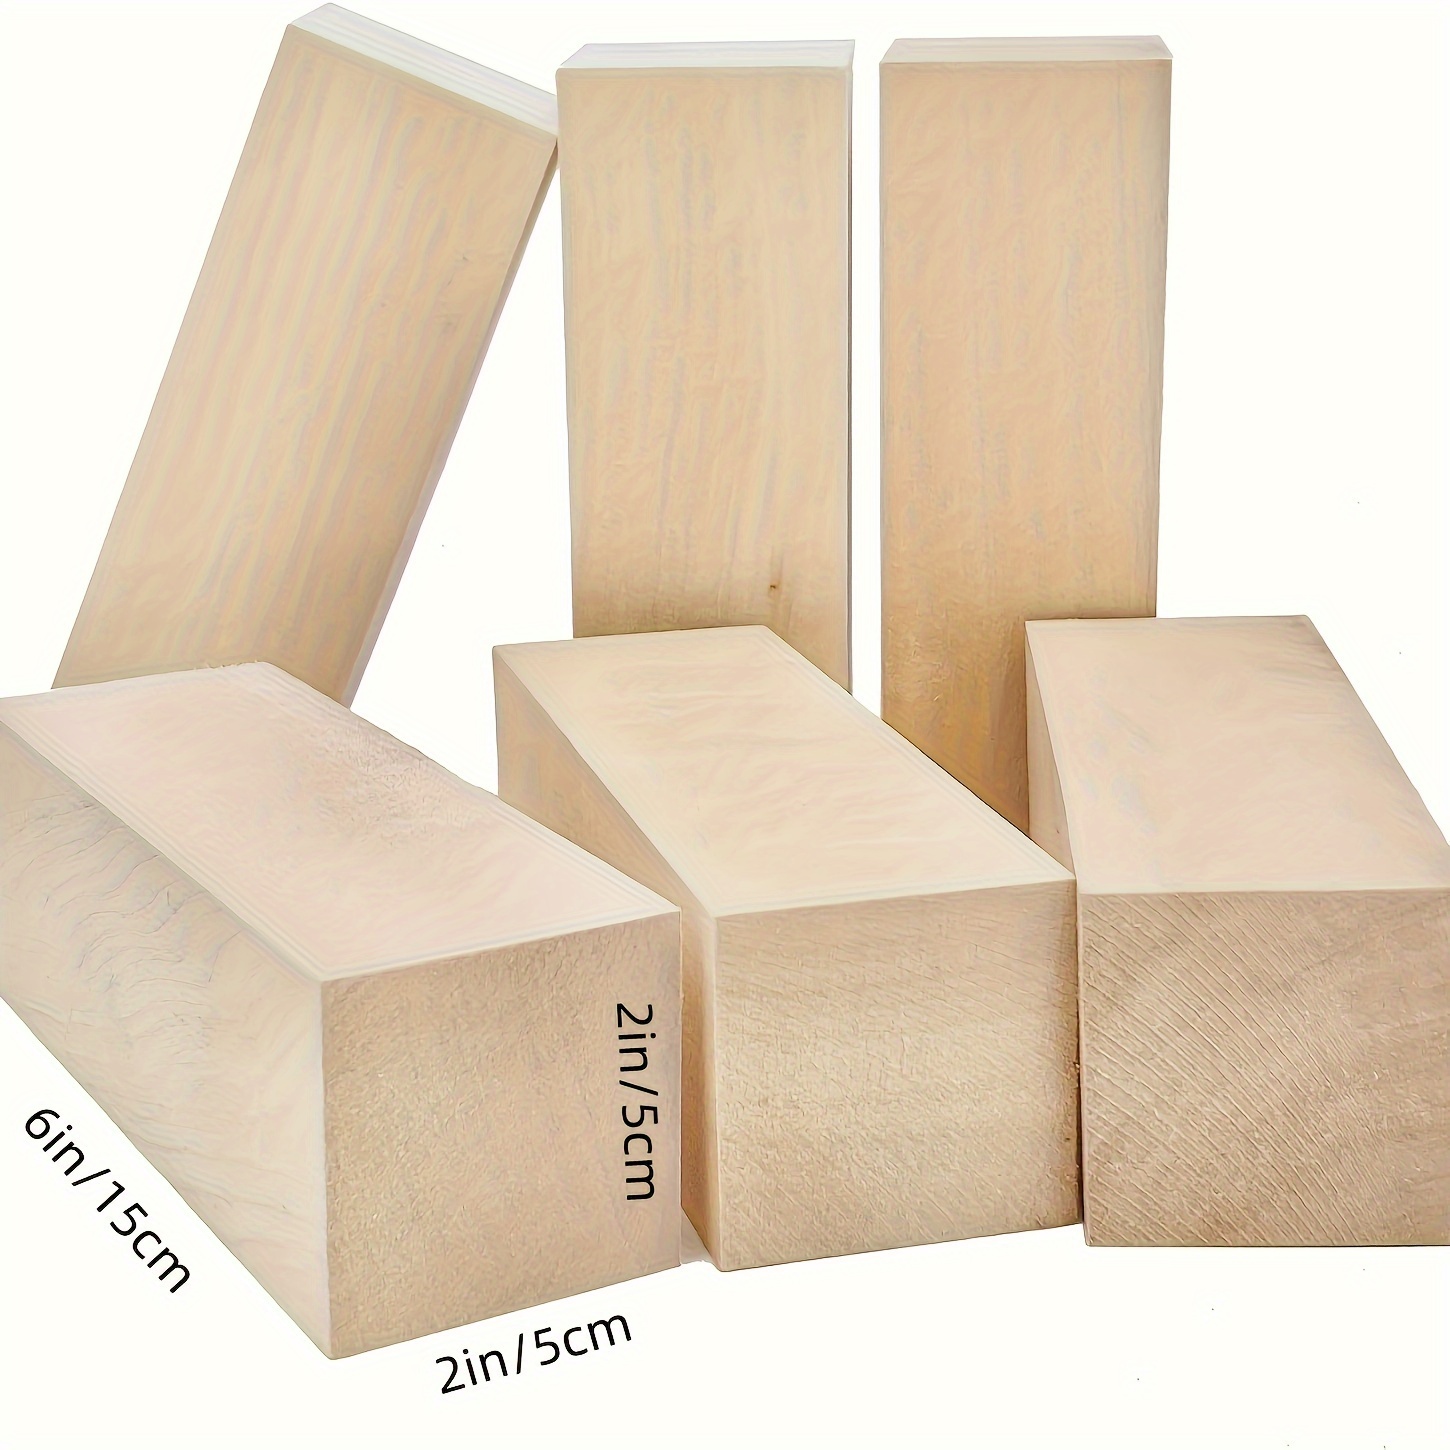 Basswood Carving Blocks Kit - 5-Piece Wooden Whittling Blocks